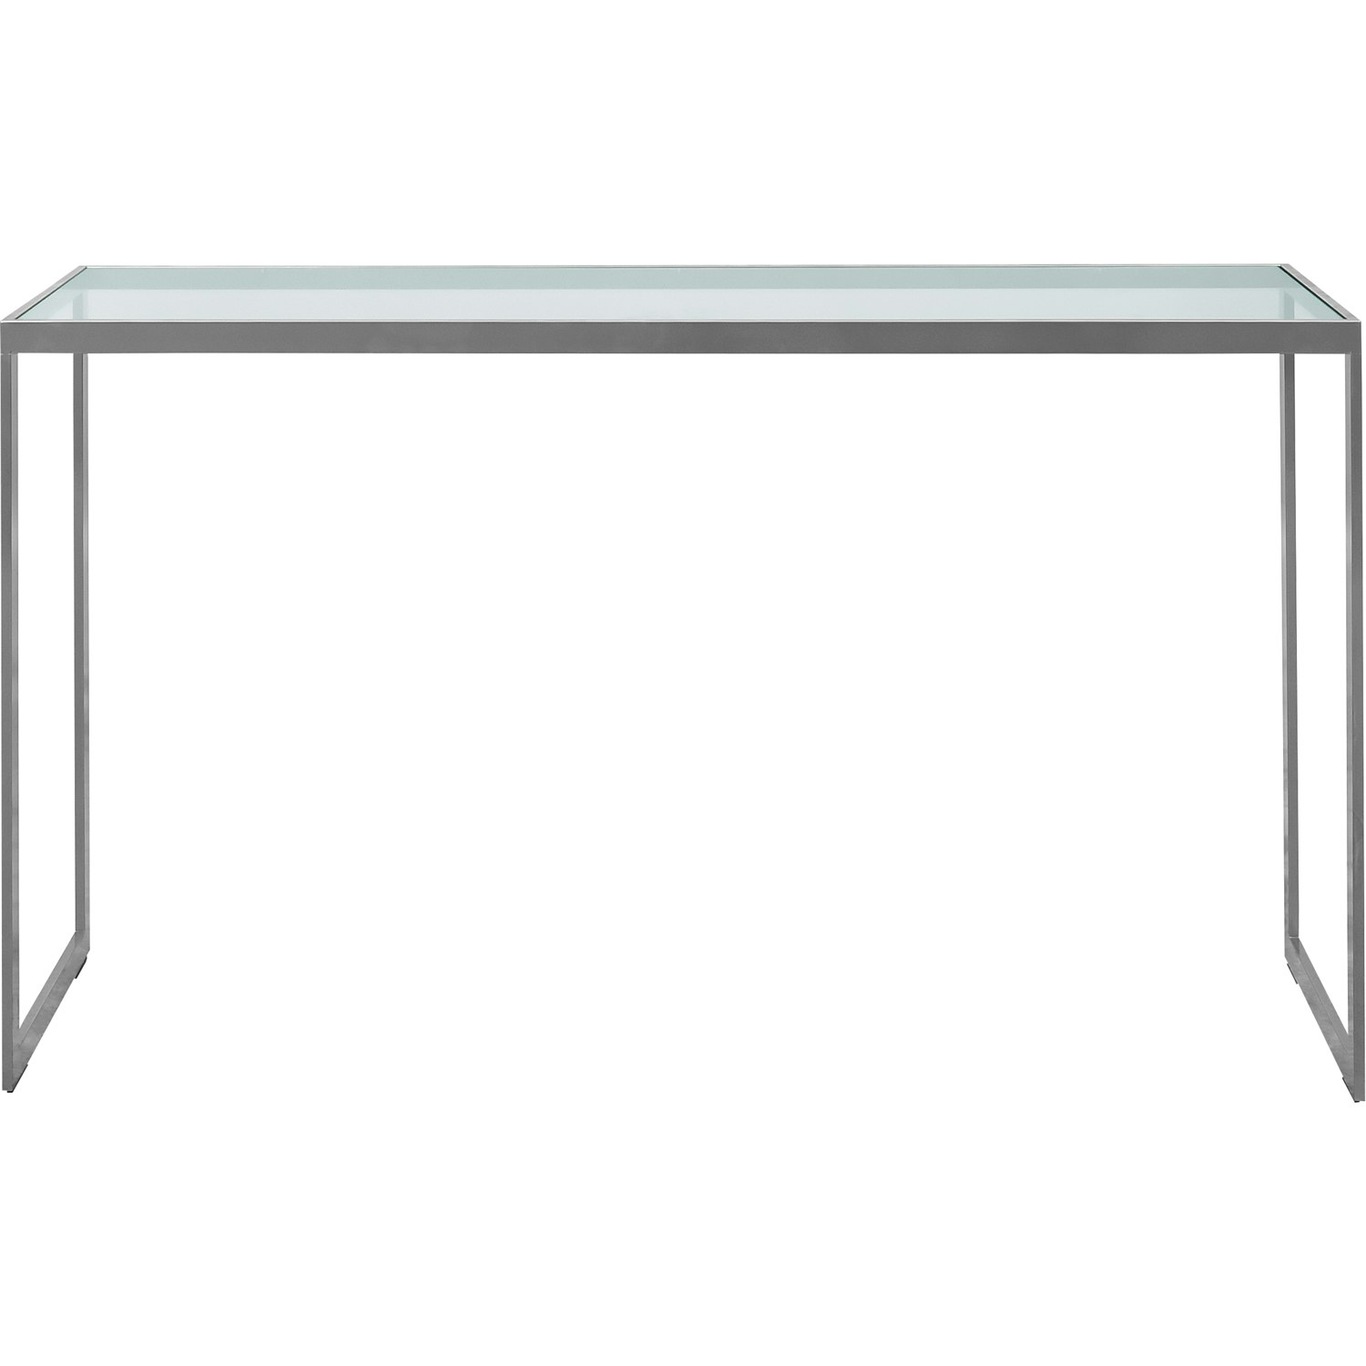 Square Console Table 122x36x70 cm, Silver Grey/Glass